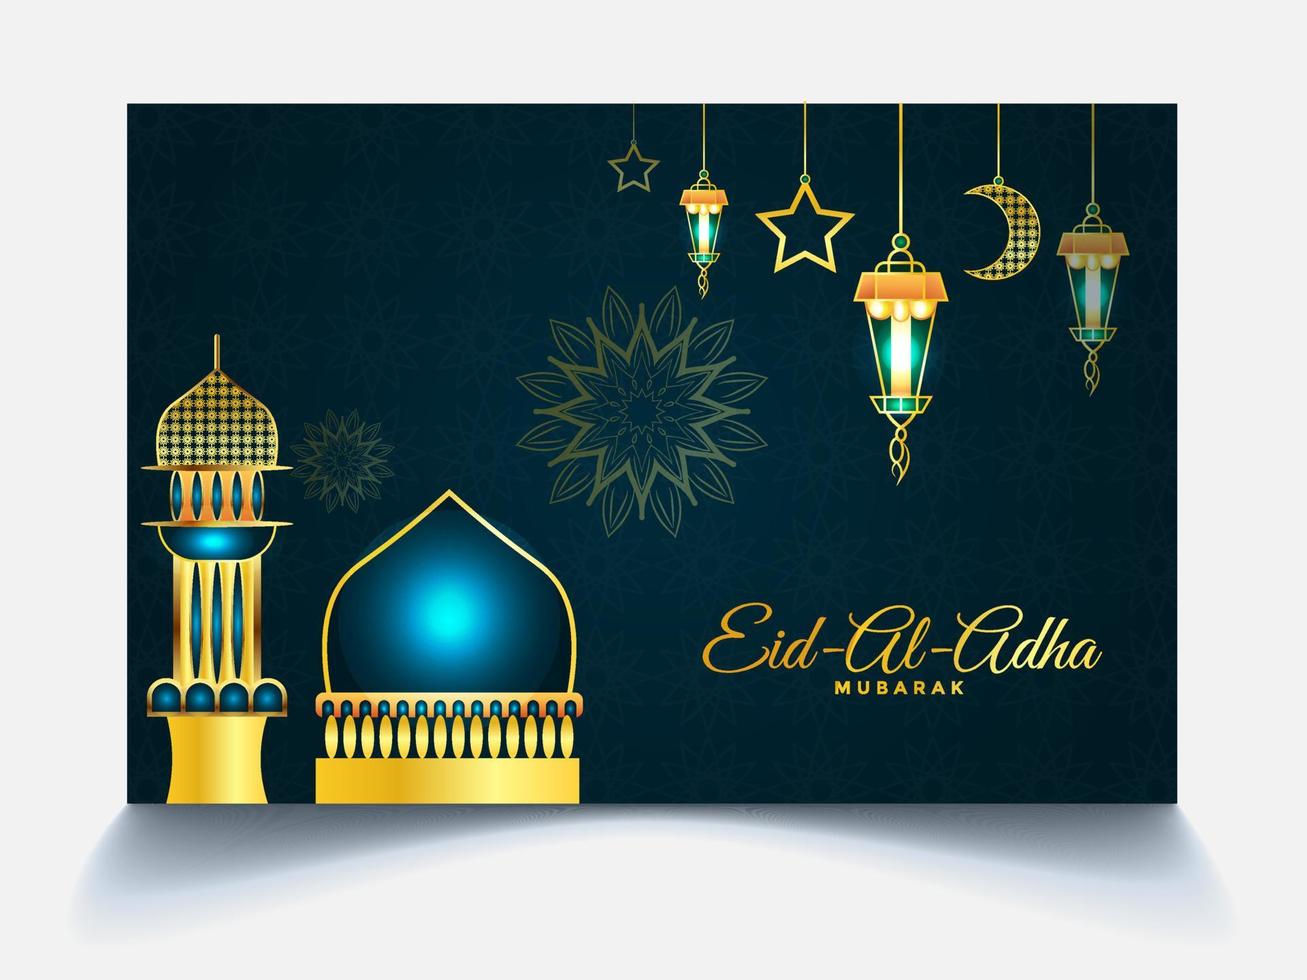 eid al adha mubarak islamitisch festival social media bannersjabloon vector